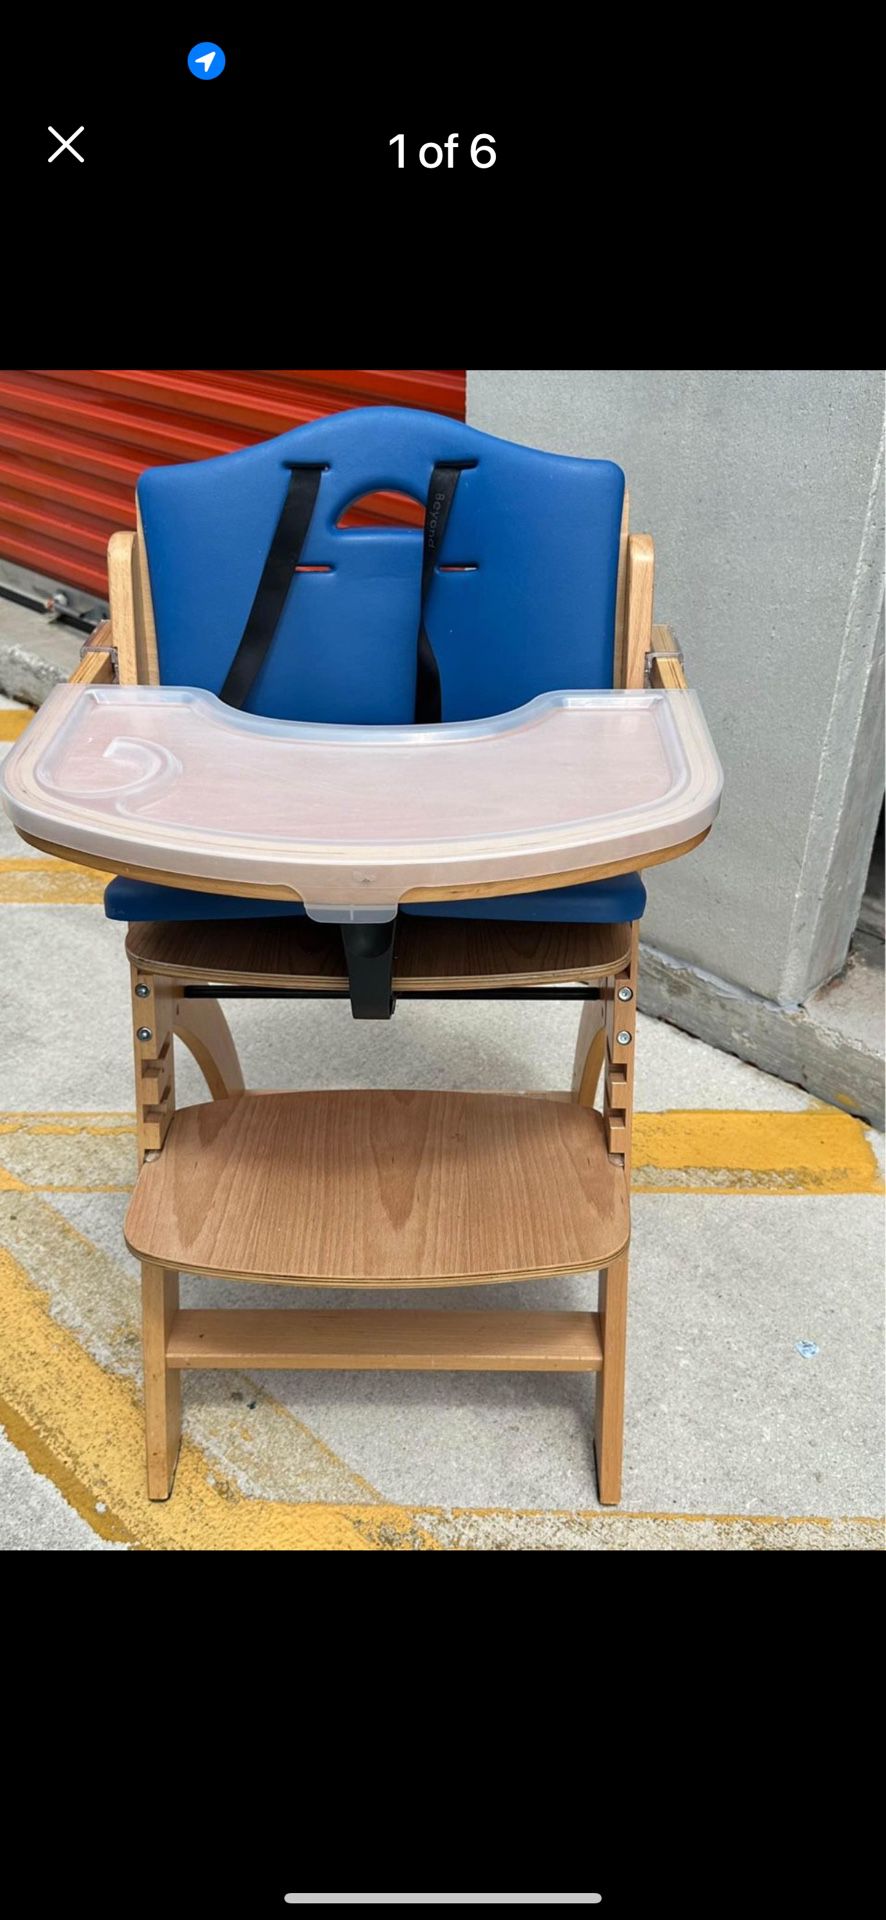 Abiie Wood Junior Convertible High Chair Set